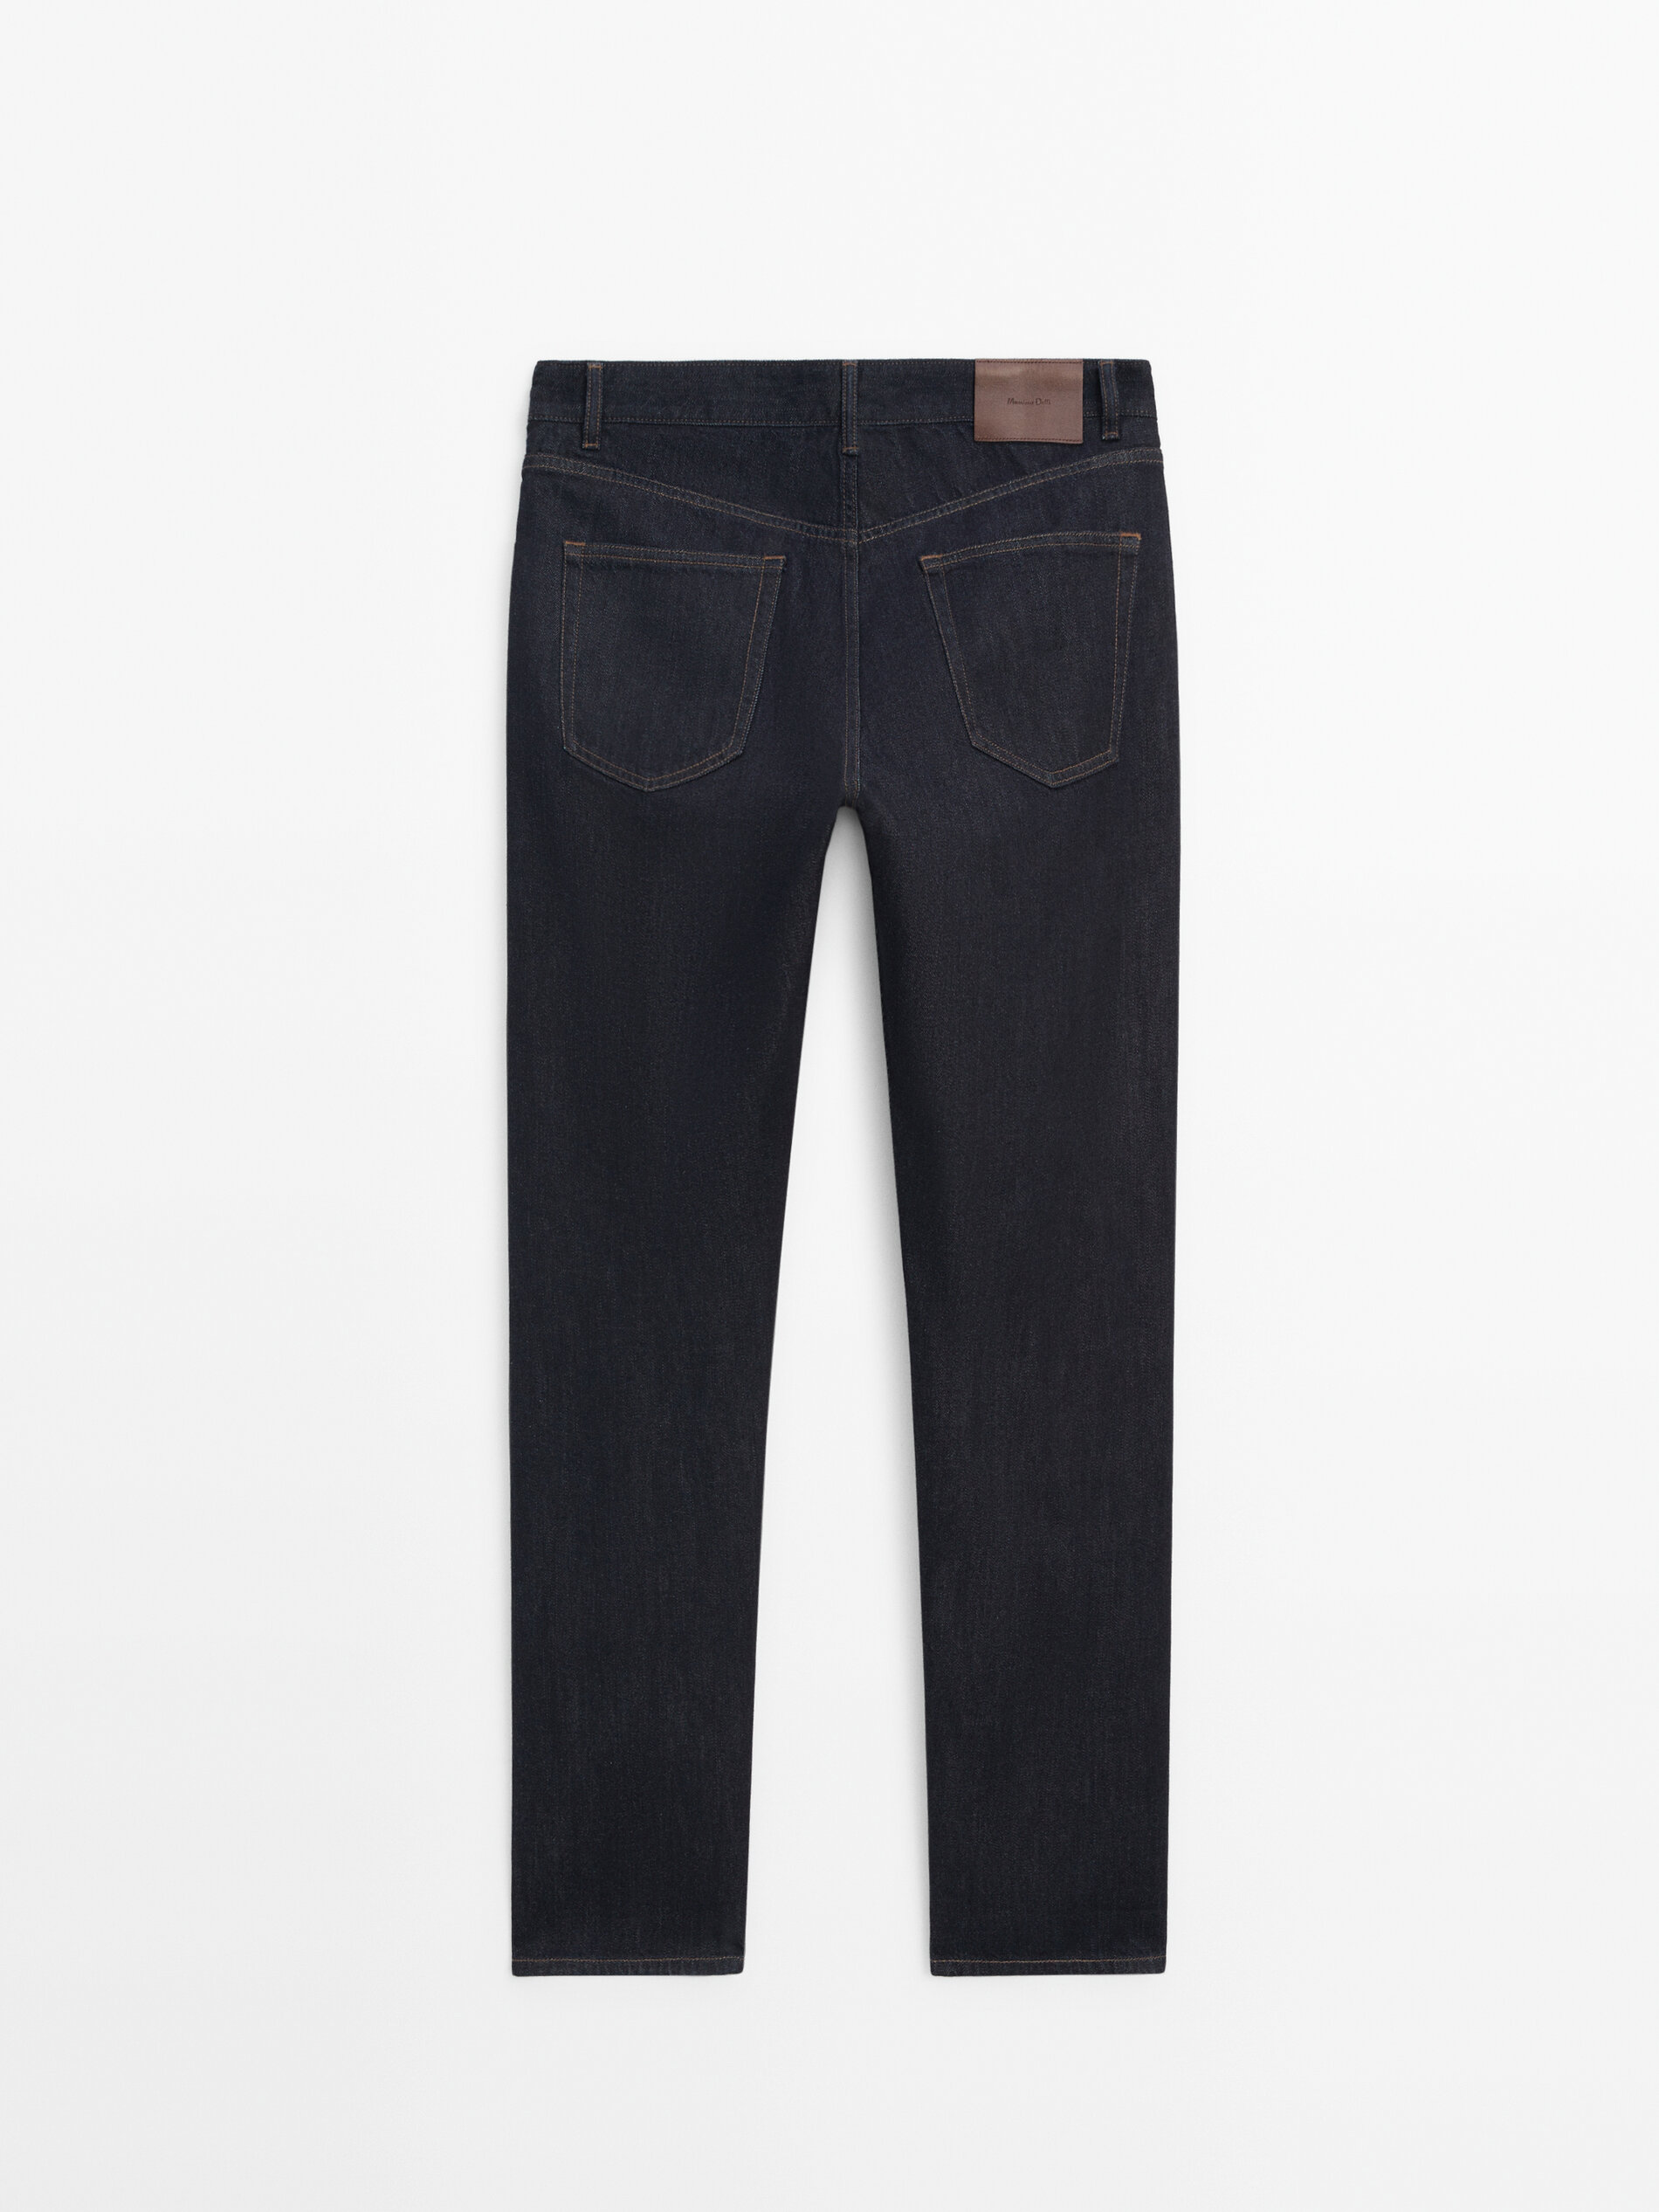 Jeans selvedge desencolado tapered fit